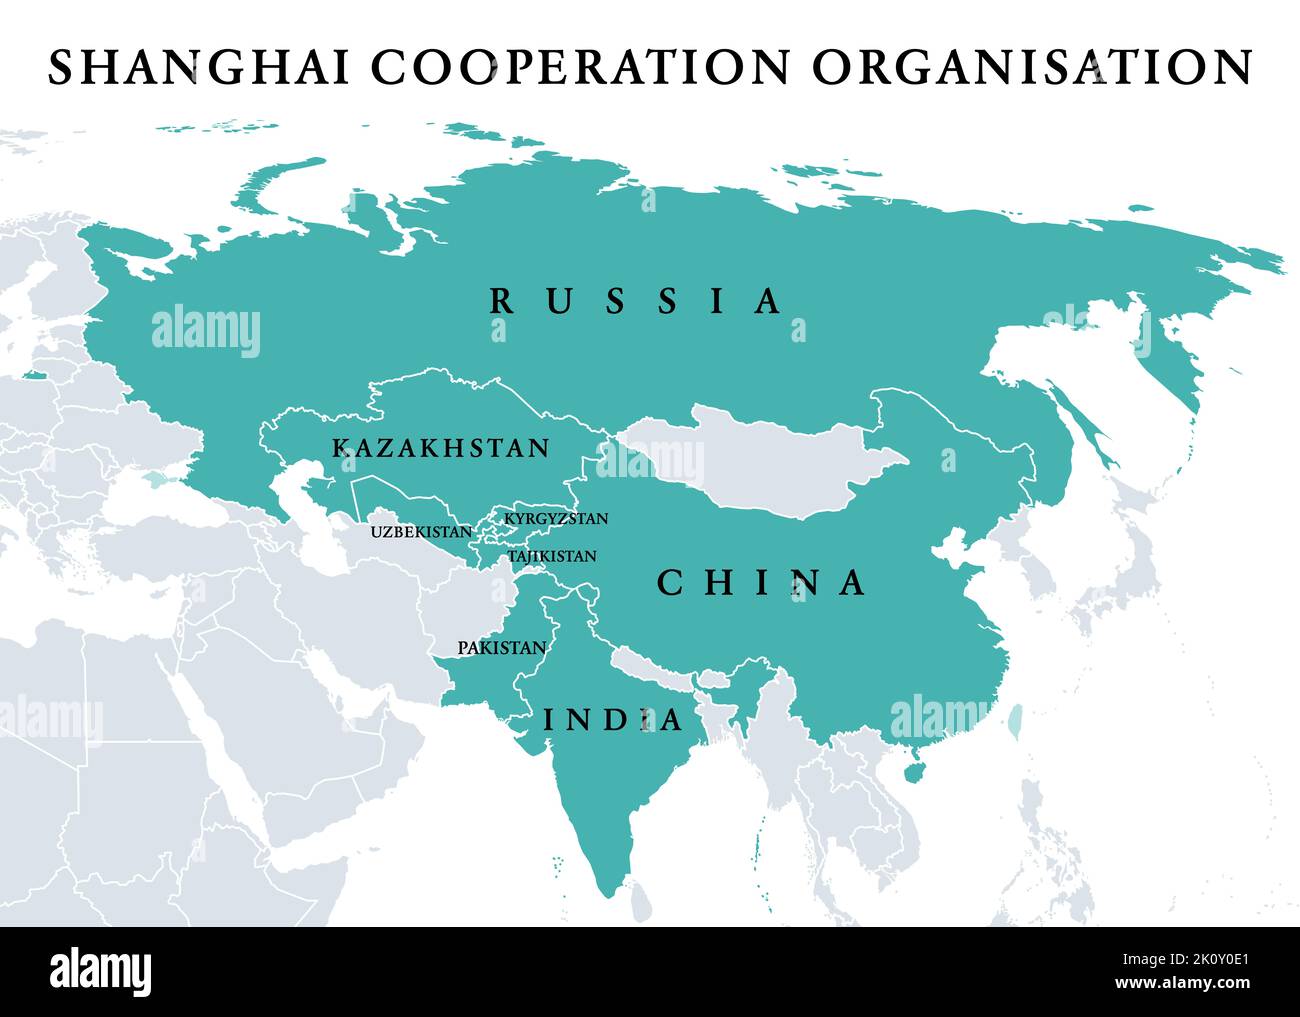 Shanghai Cooperation Organisation, SCO member states, political map. Eurasian political, economic and security organization. Stock Photo